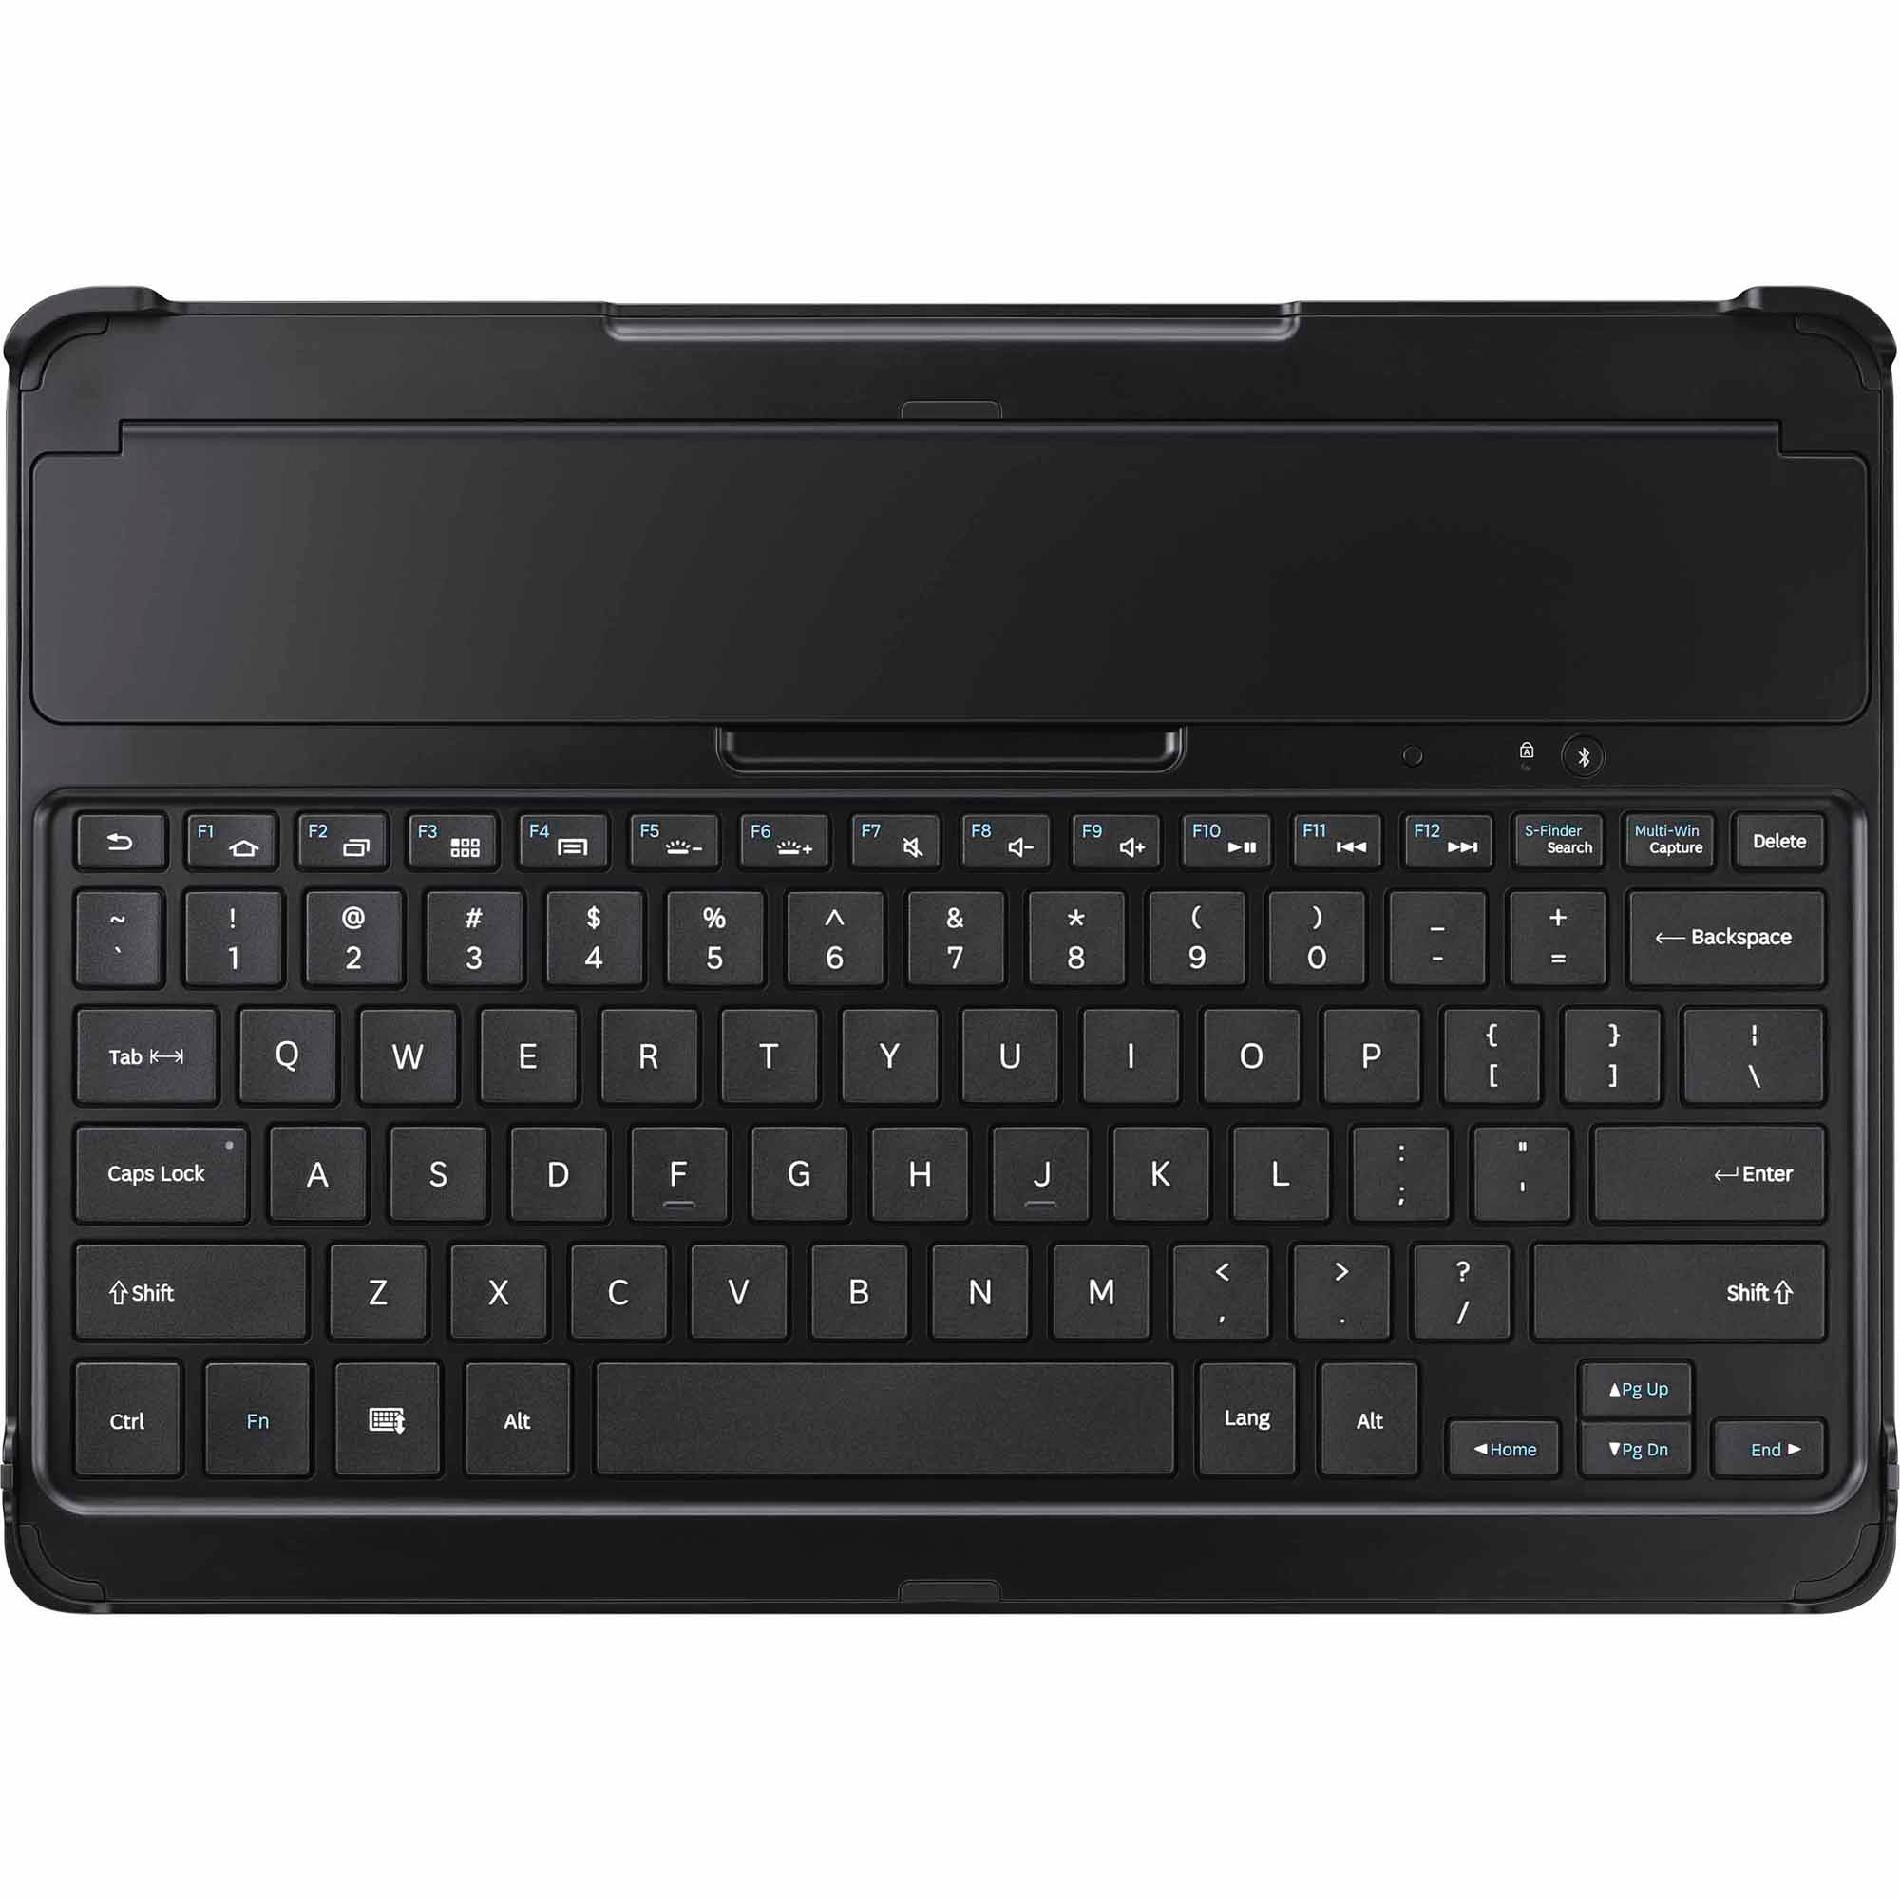 NotePRO 12.2/TabPRO 12.2 Galaxy Bluetooth Keyboard Cover- Black